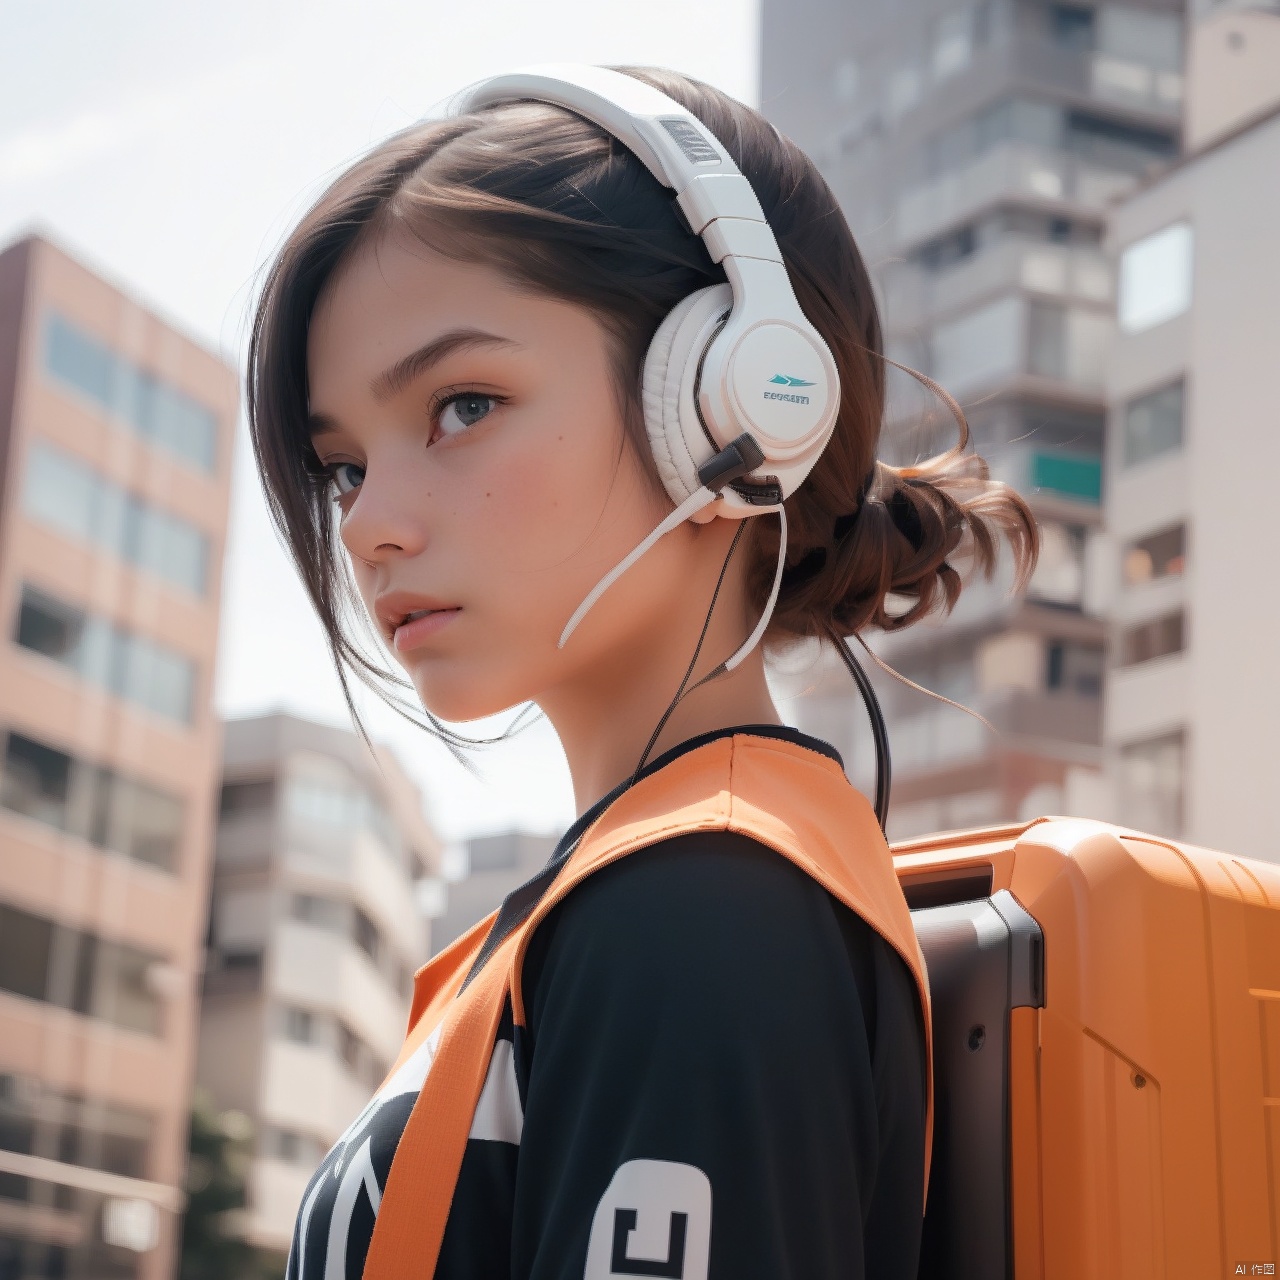  1girl,(A Robot:0.6),orange,Wearing headphones,Upper body, machinery,(smile:0.8),black_hair,